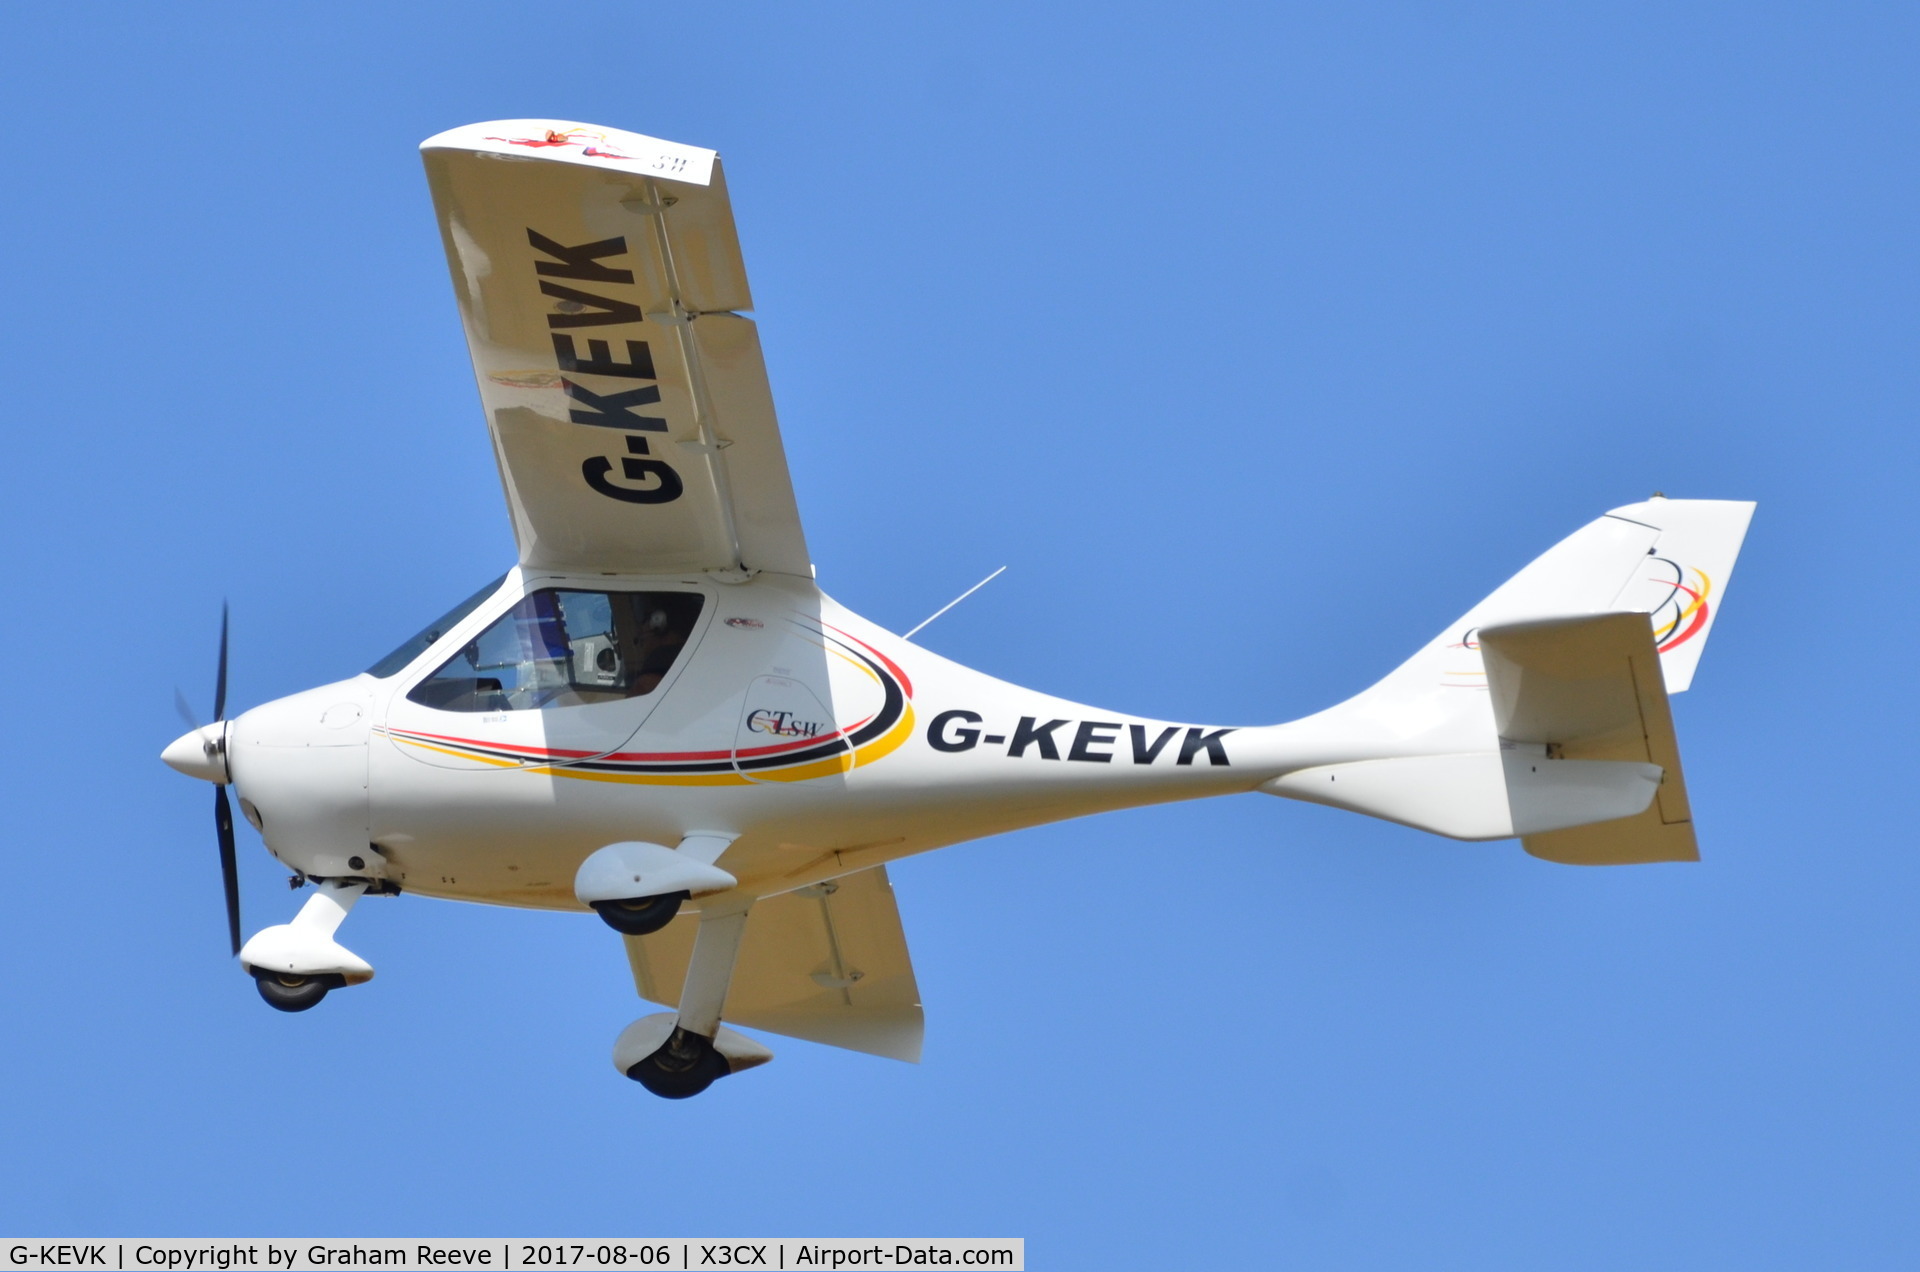 G-KEVK, 2009 Flight Design CTSW C/N 8483, Departing from Northrepps.